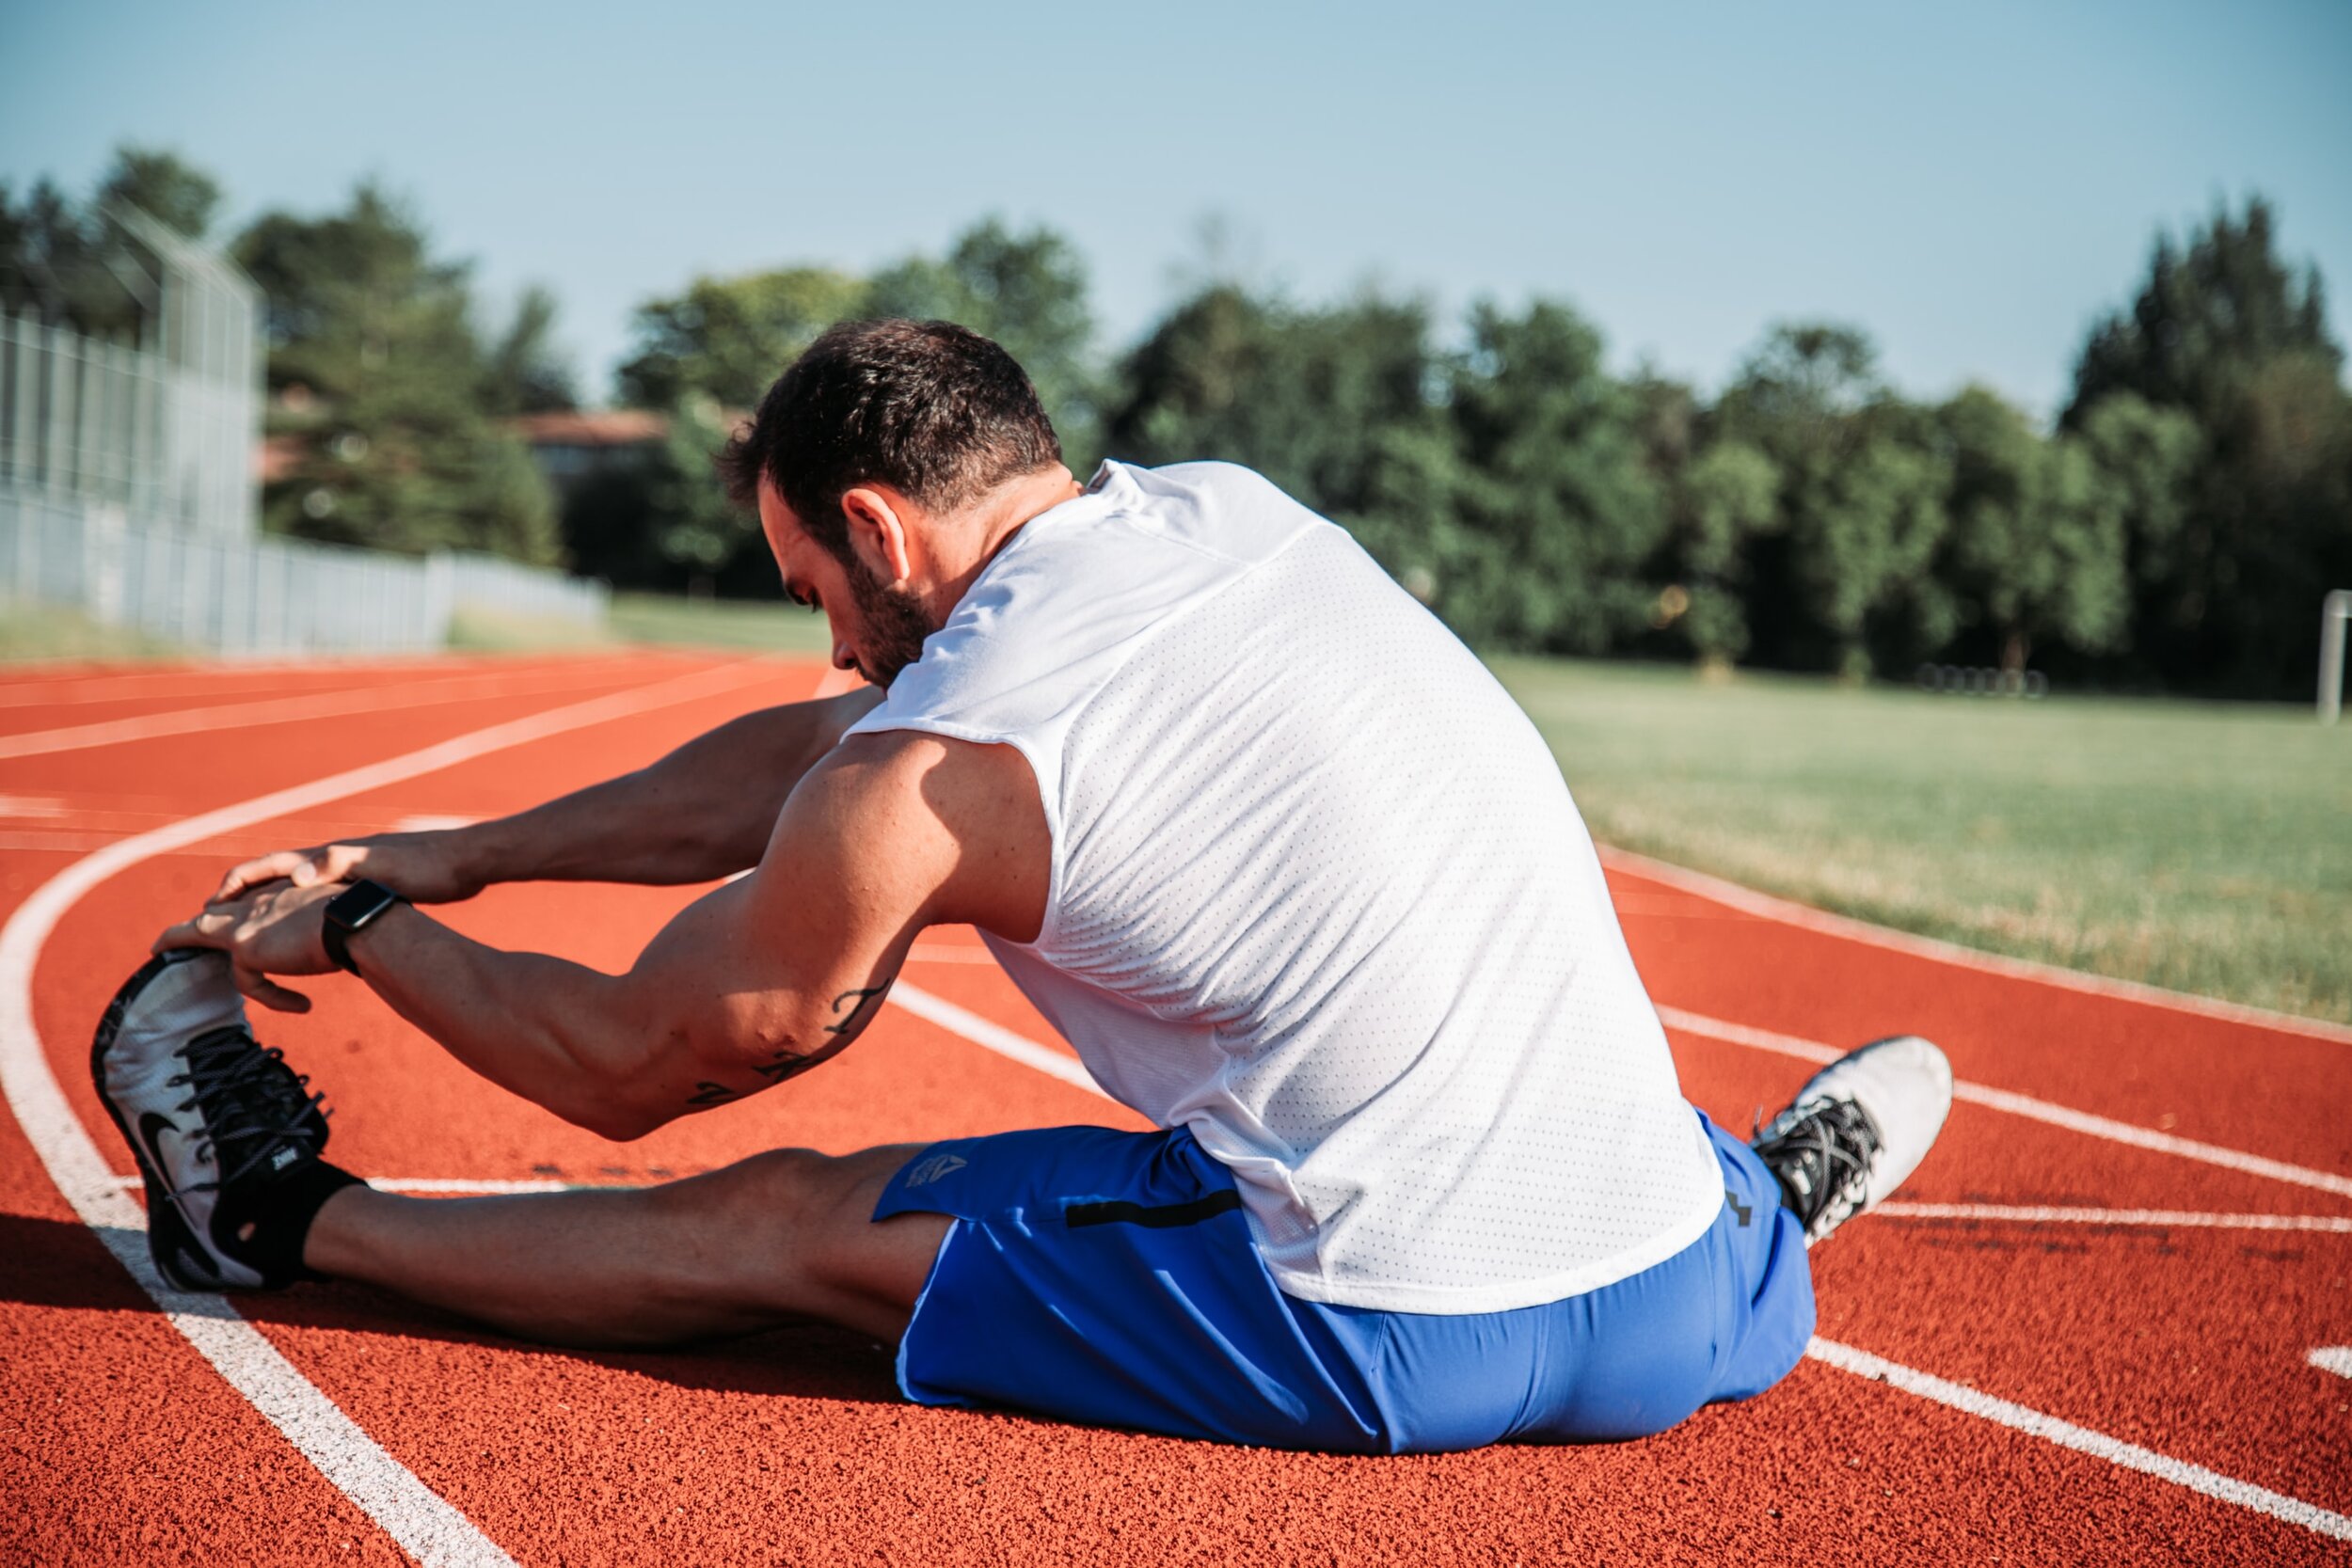 II. Understanding the Causes of Running Injuries